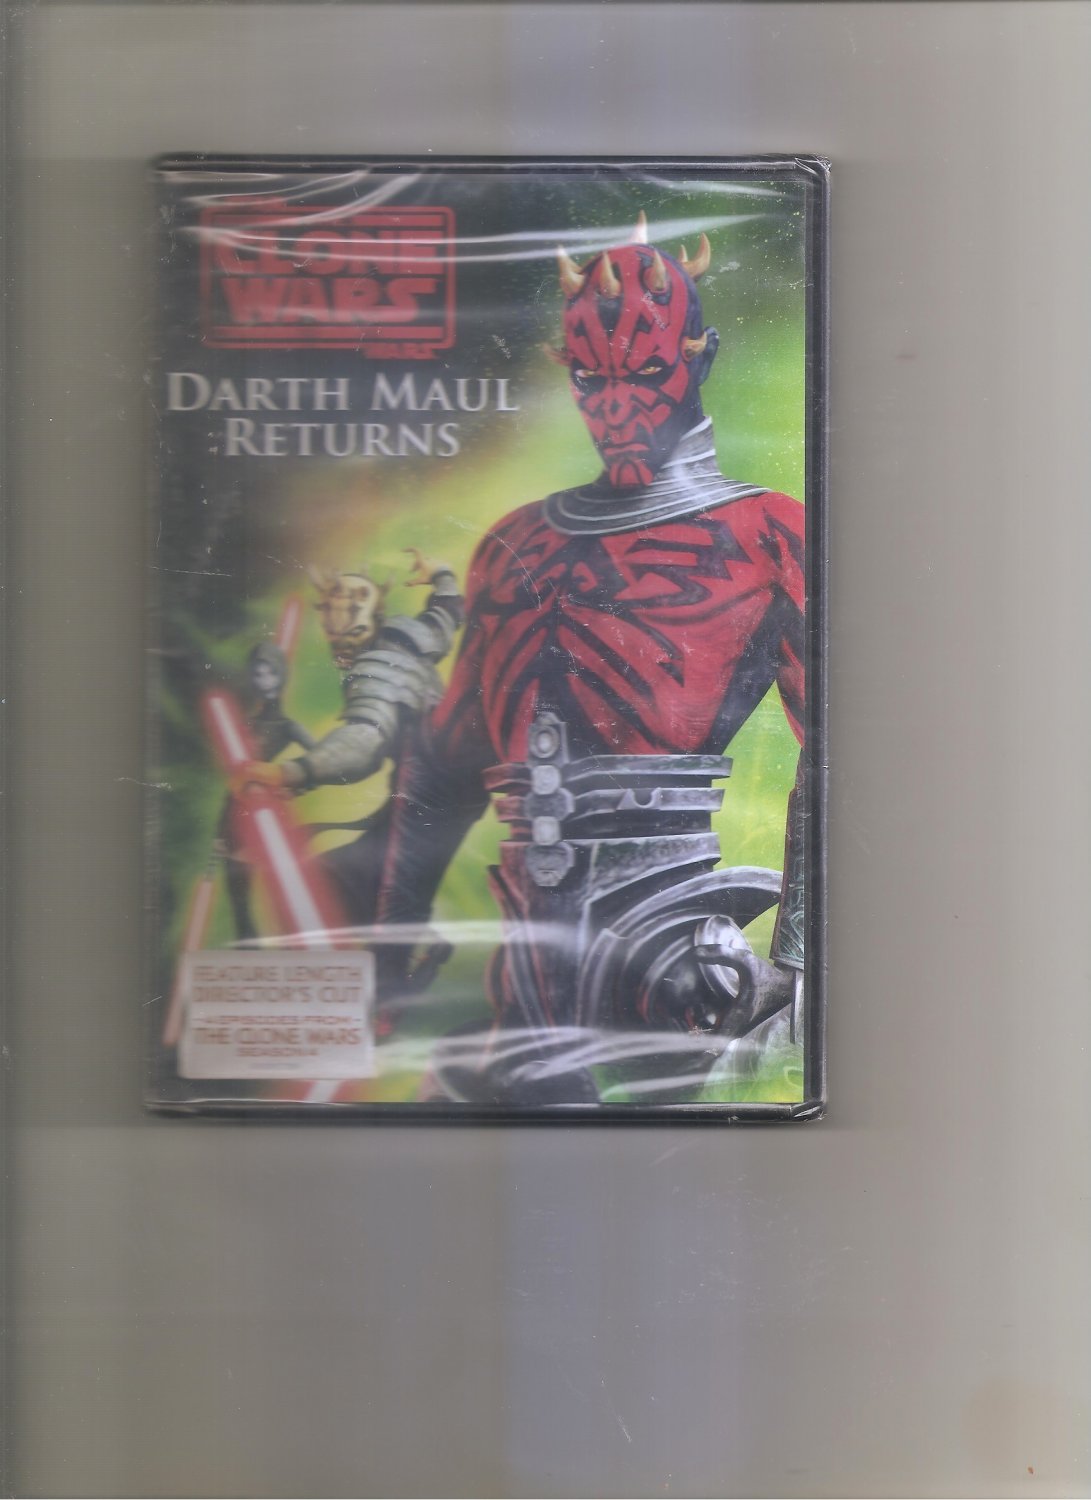 Star Wars: The Clone Wars - Darth Maul Returns (DVD, 2013)